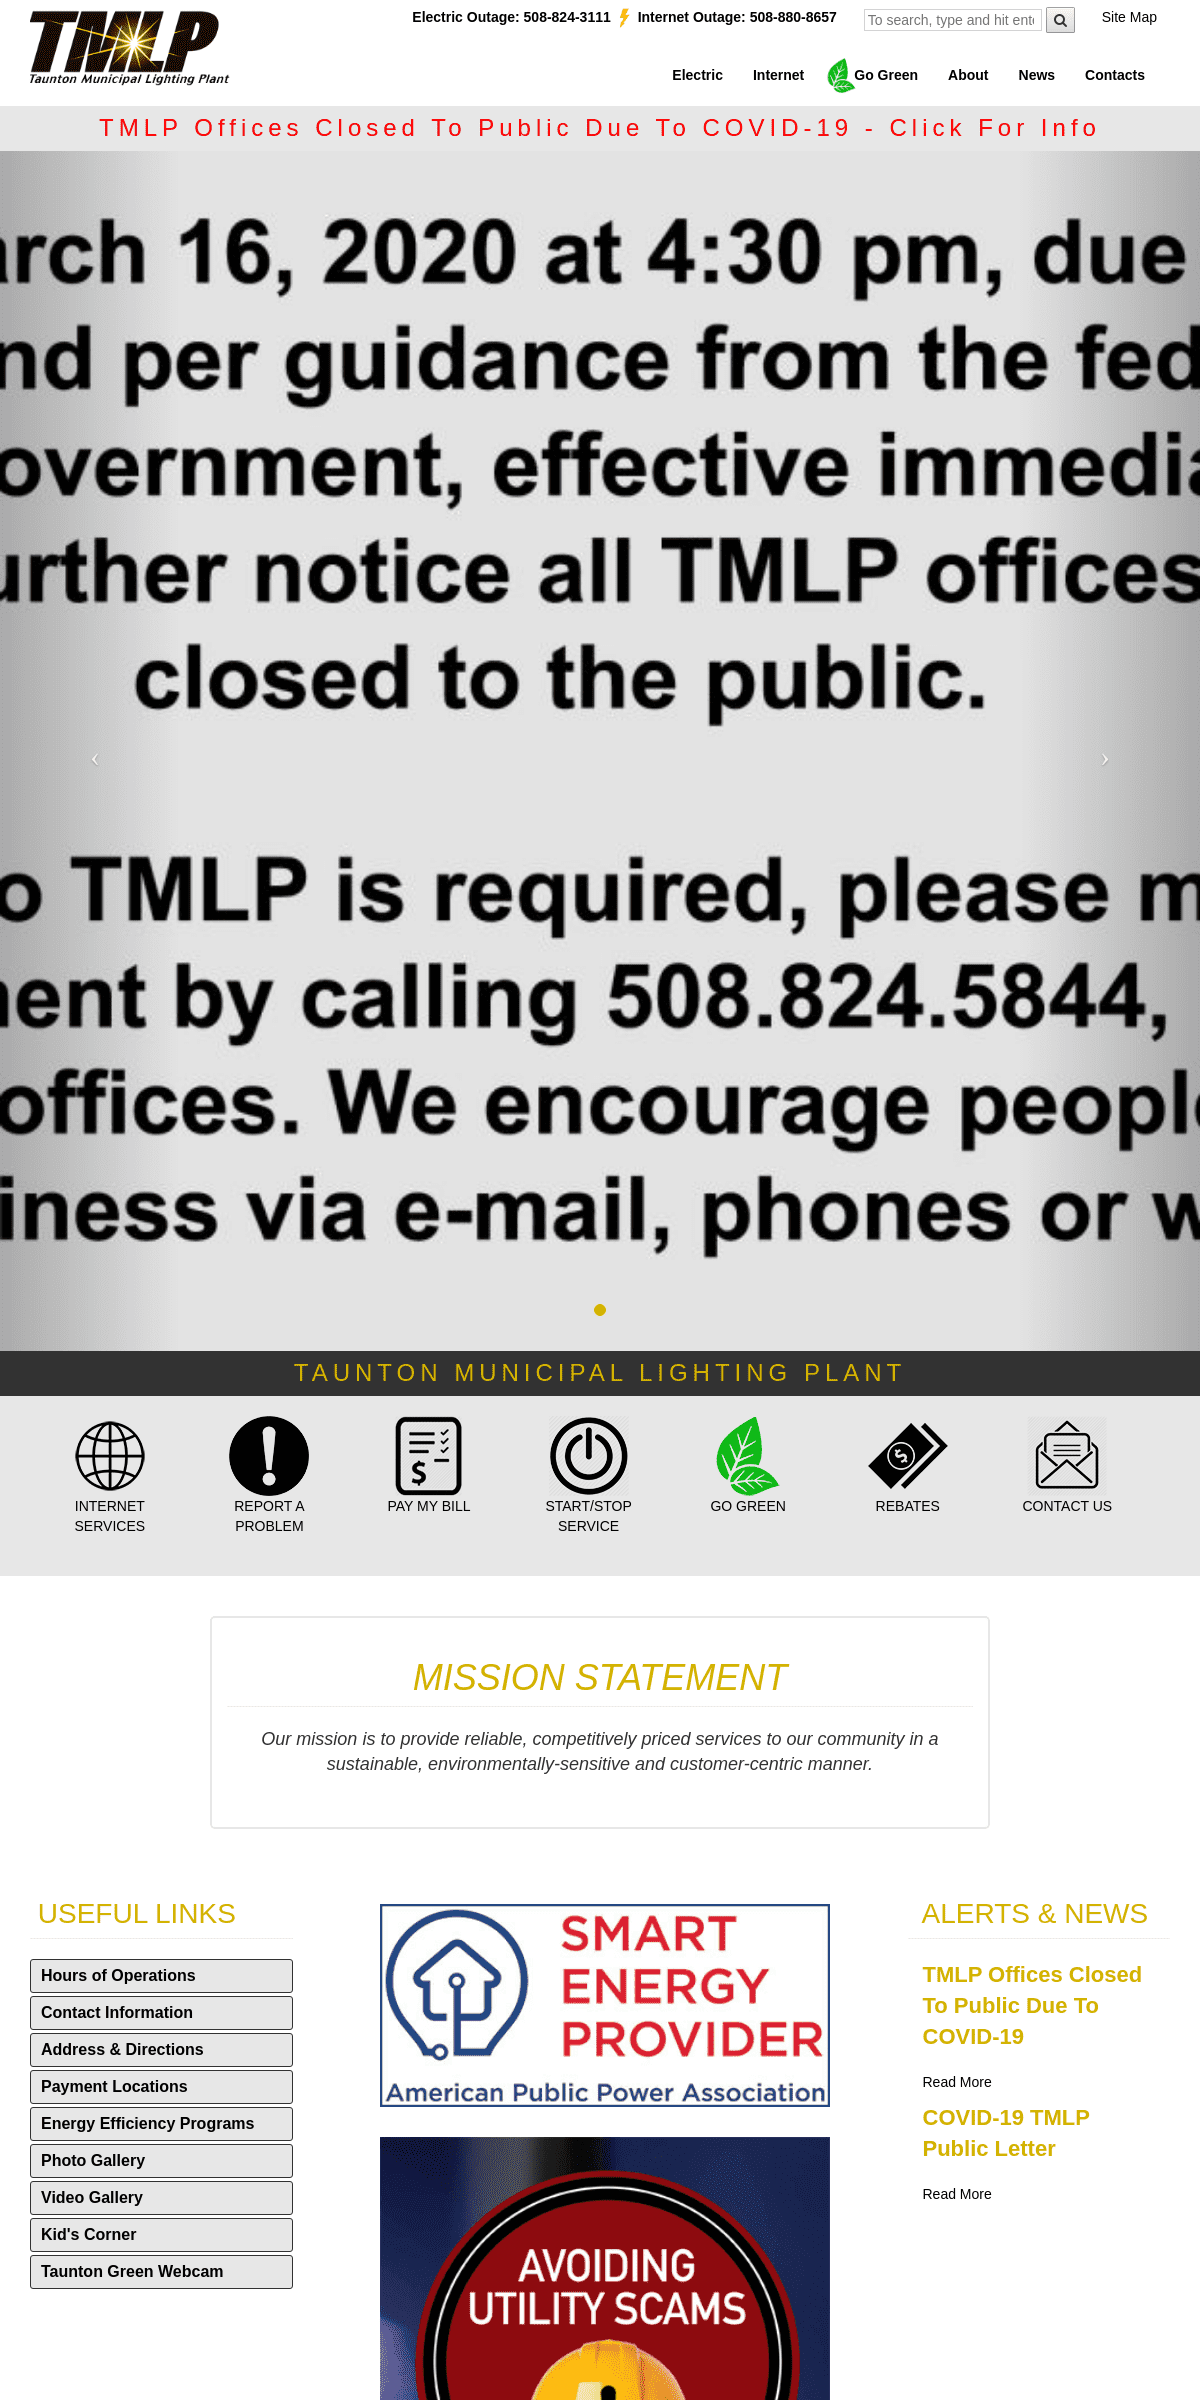 A complete backup of tmlp.com